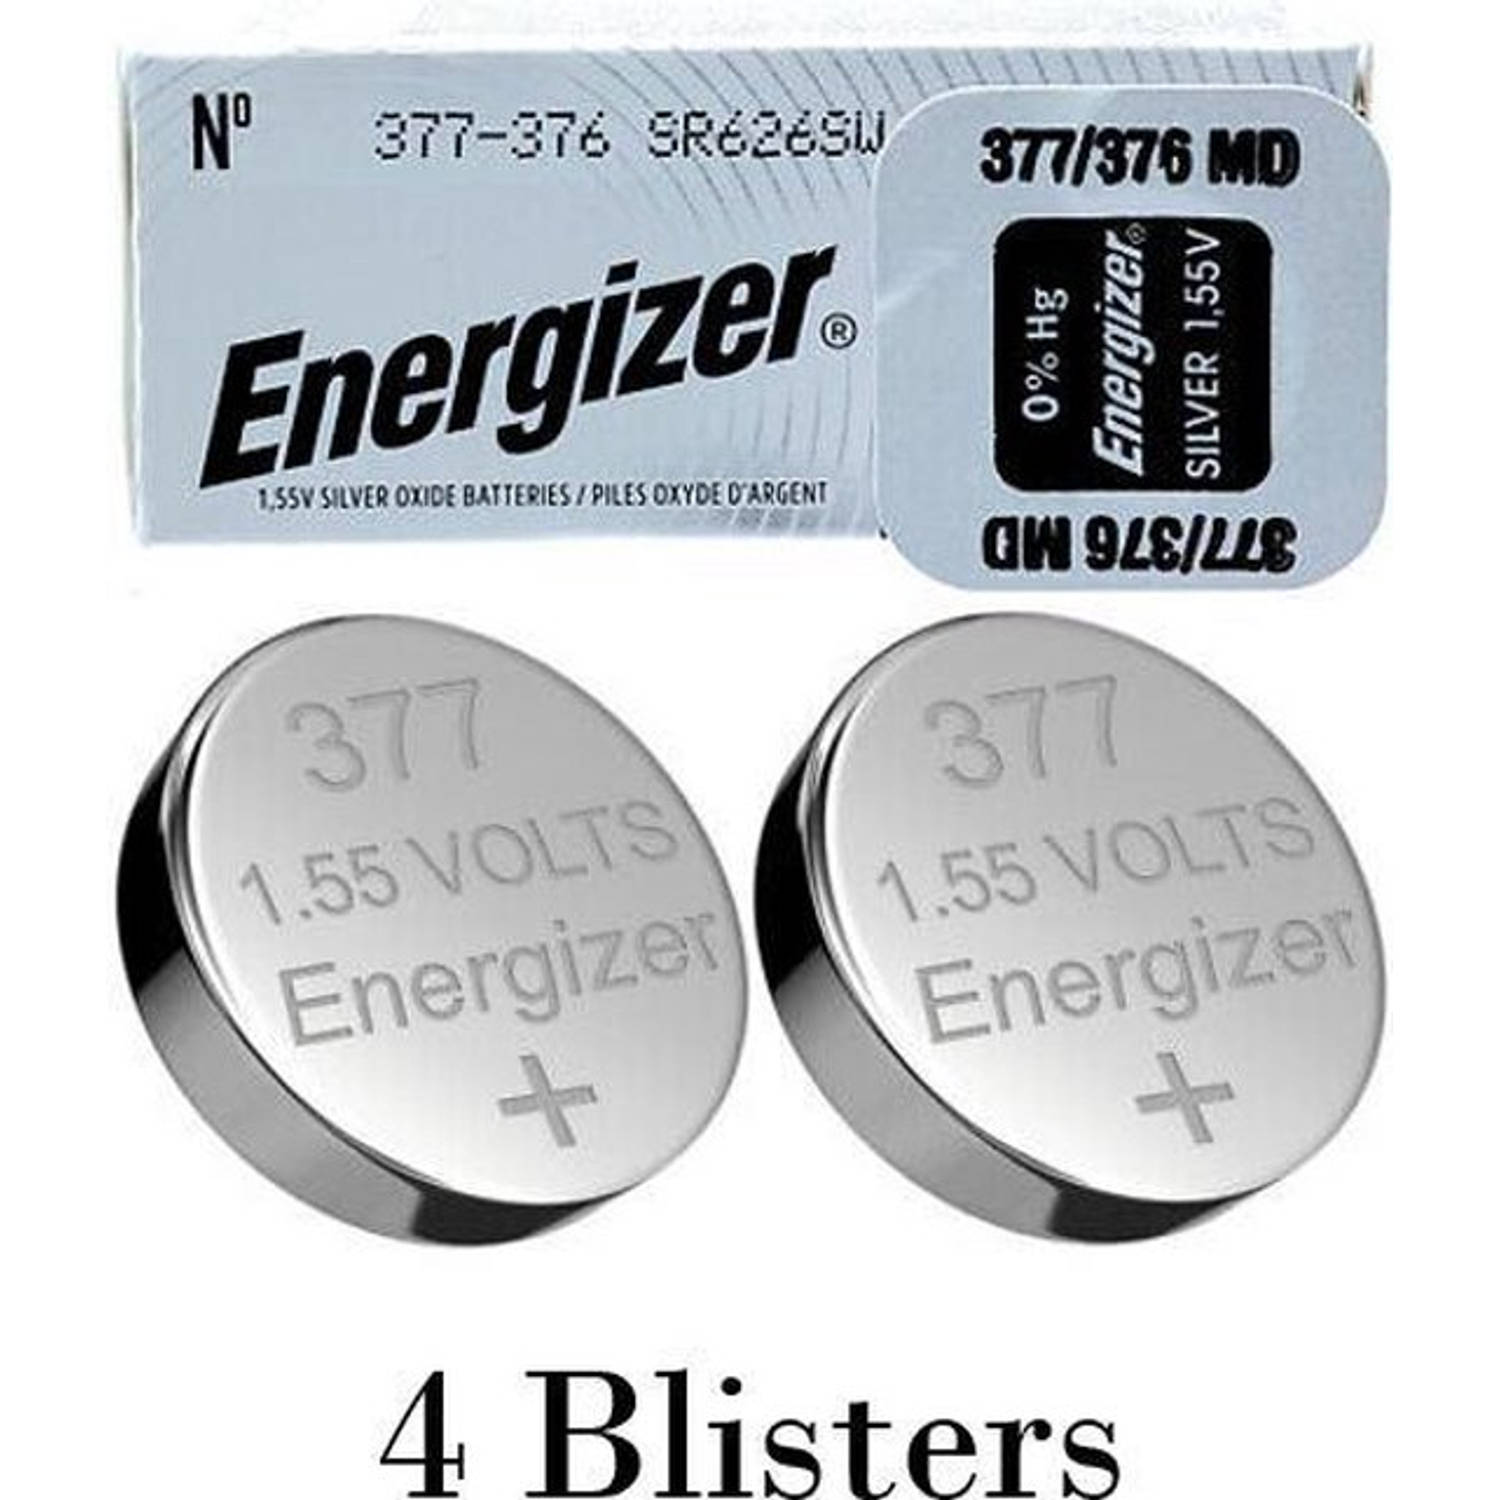 Energizer 4 Stuks (4 Blisters A 1 Stuk) 376/377 Md 1.55v Knoopcel Batterij